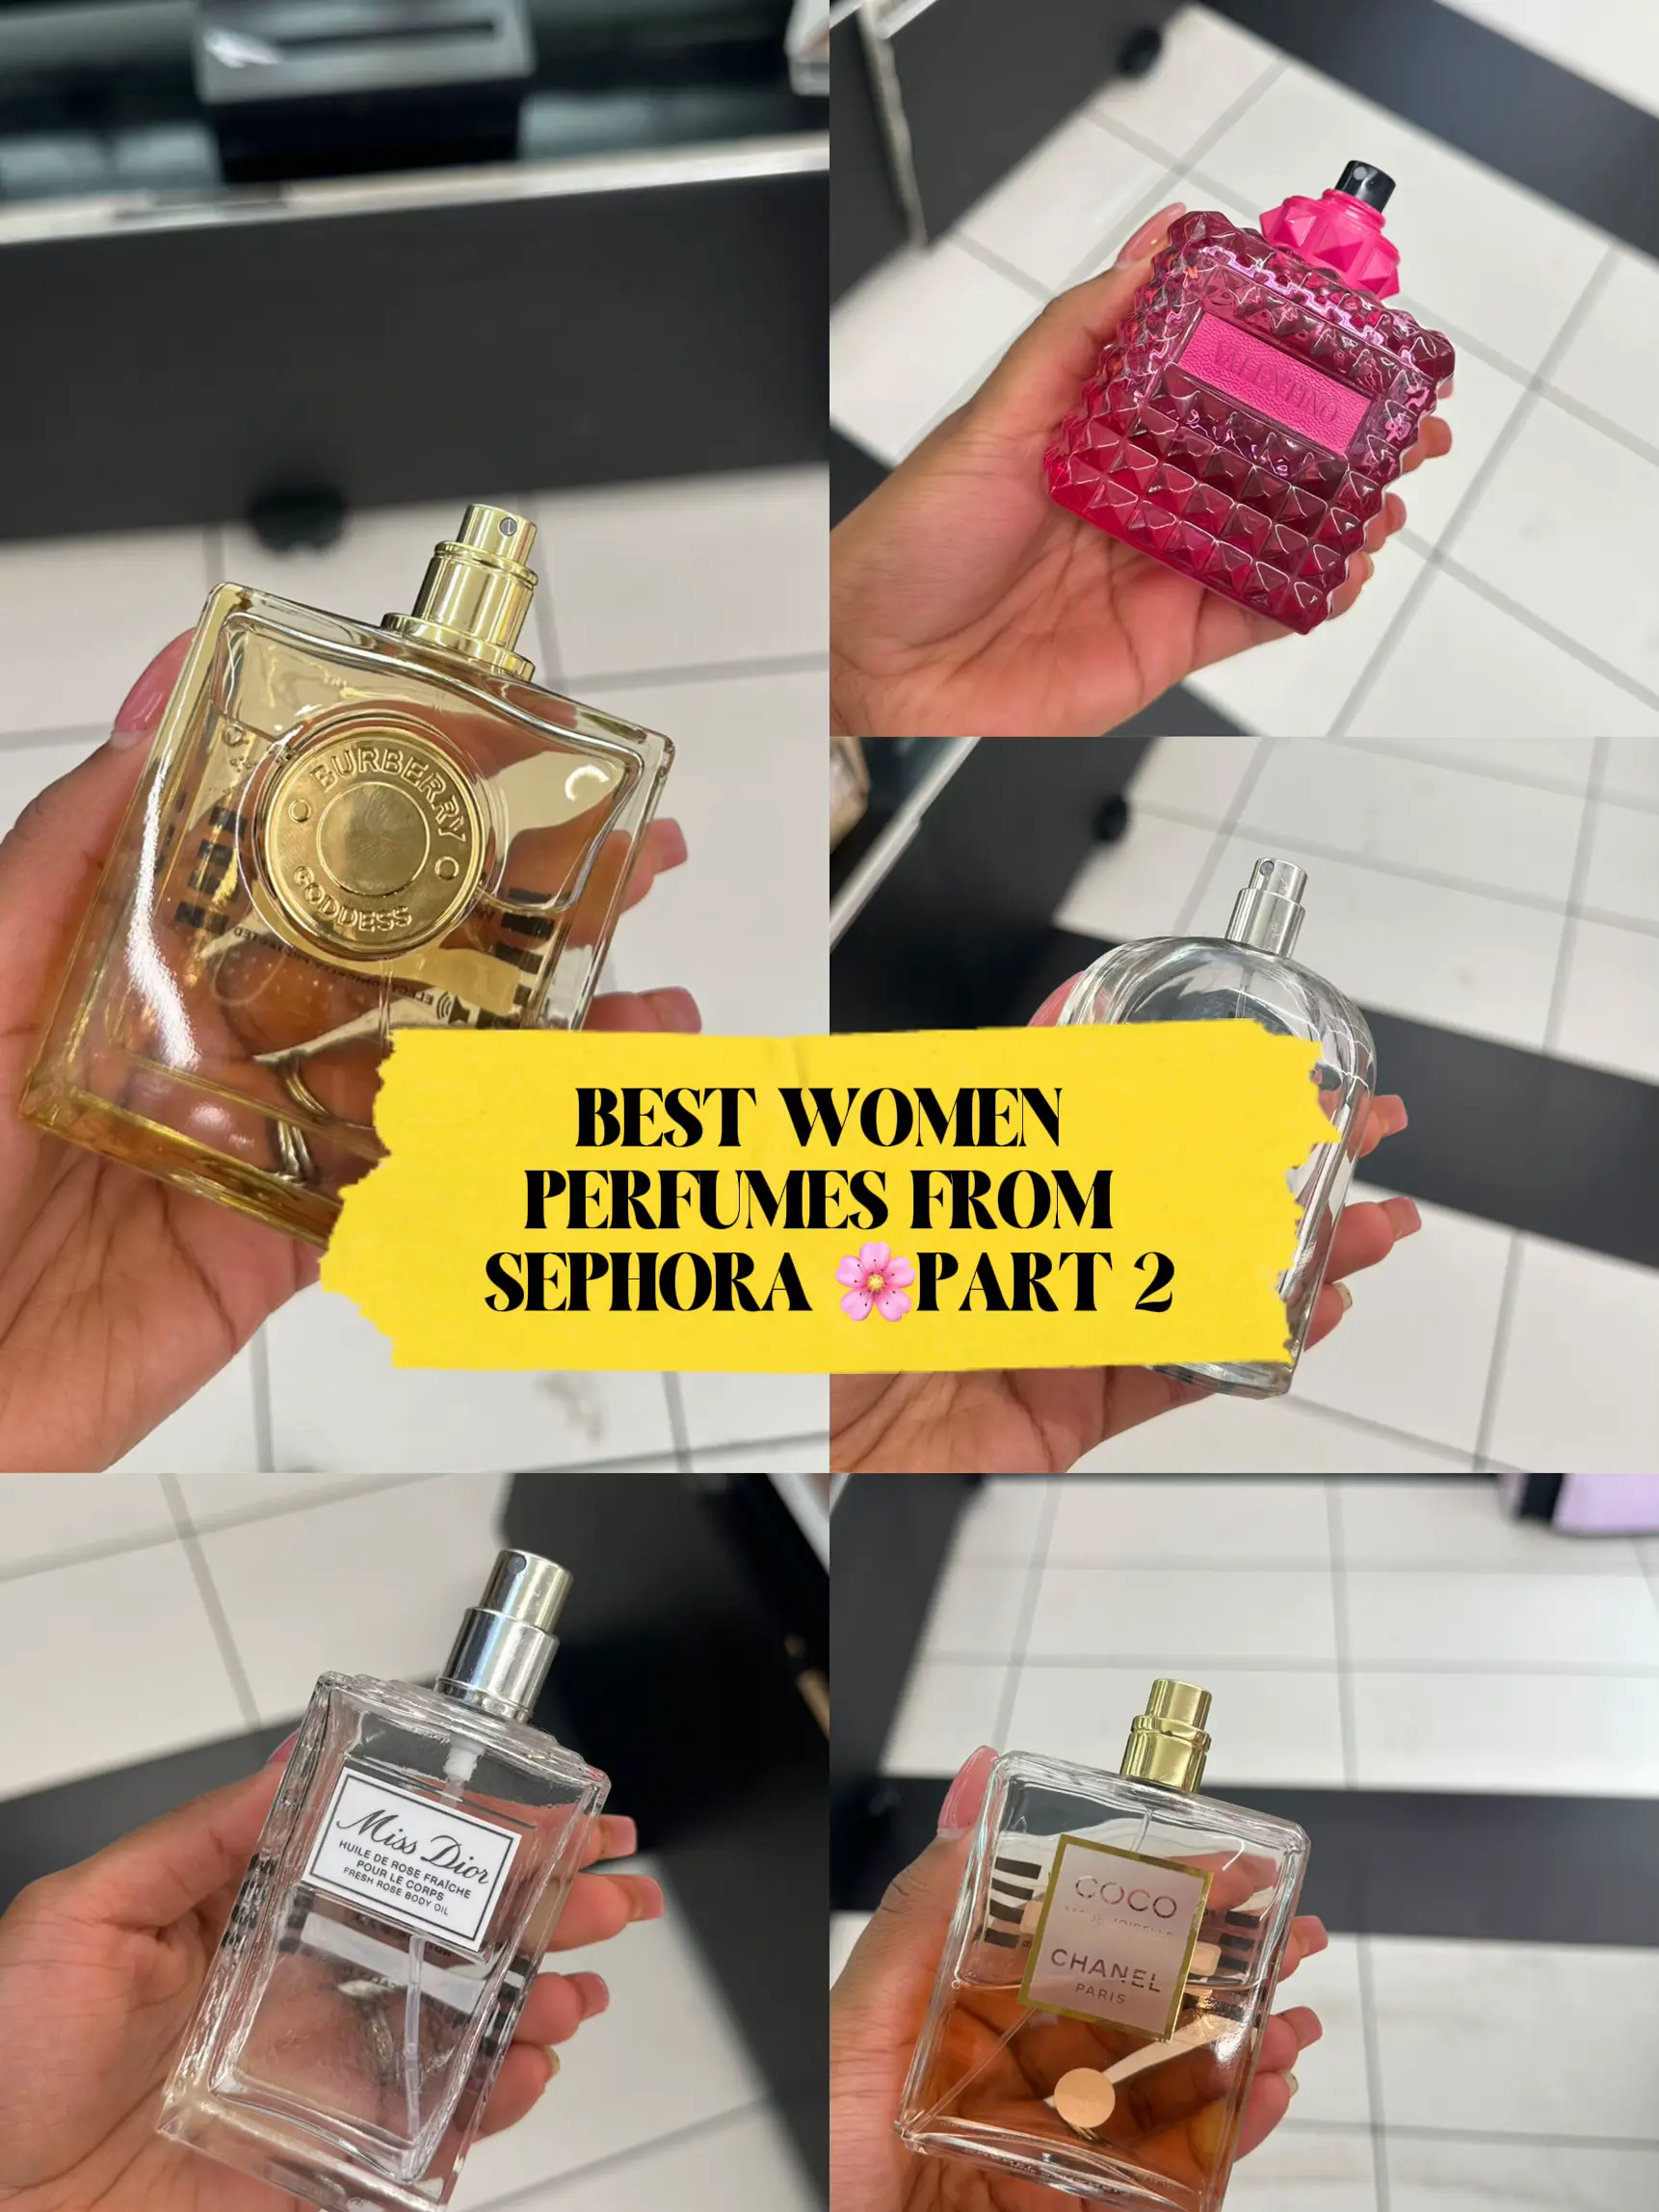 BEST WOMEN PERFUMES FROM SEPHORA 🌸PART 2